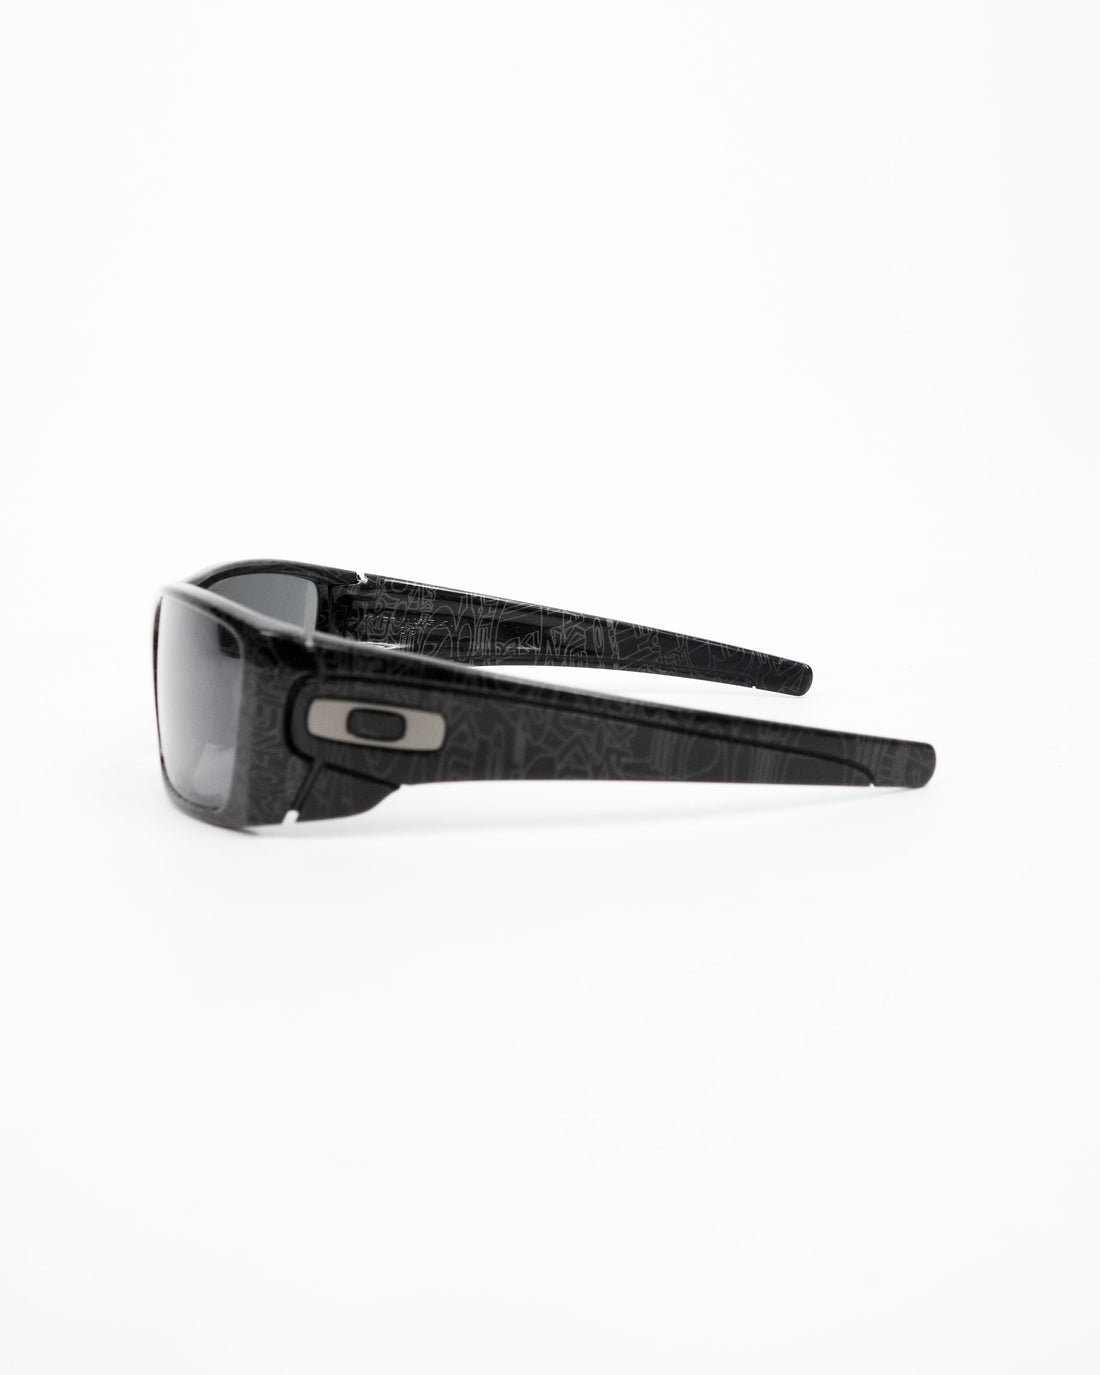 Oakley Fuel Cell Black Sunglasses 2000's